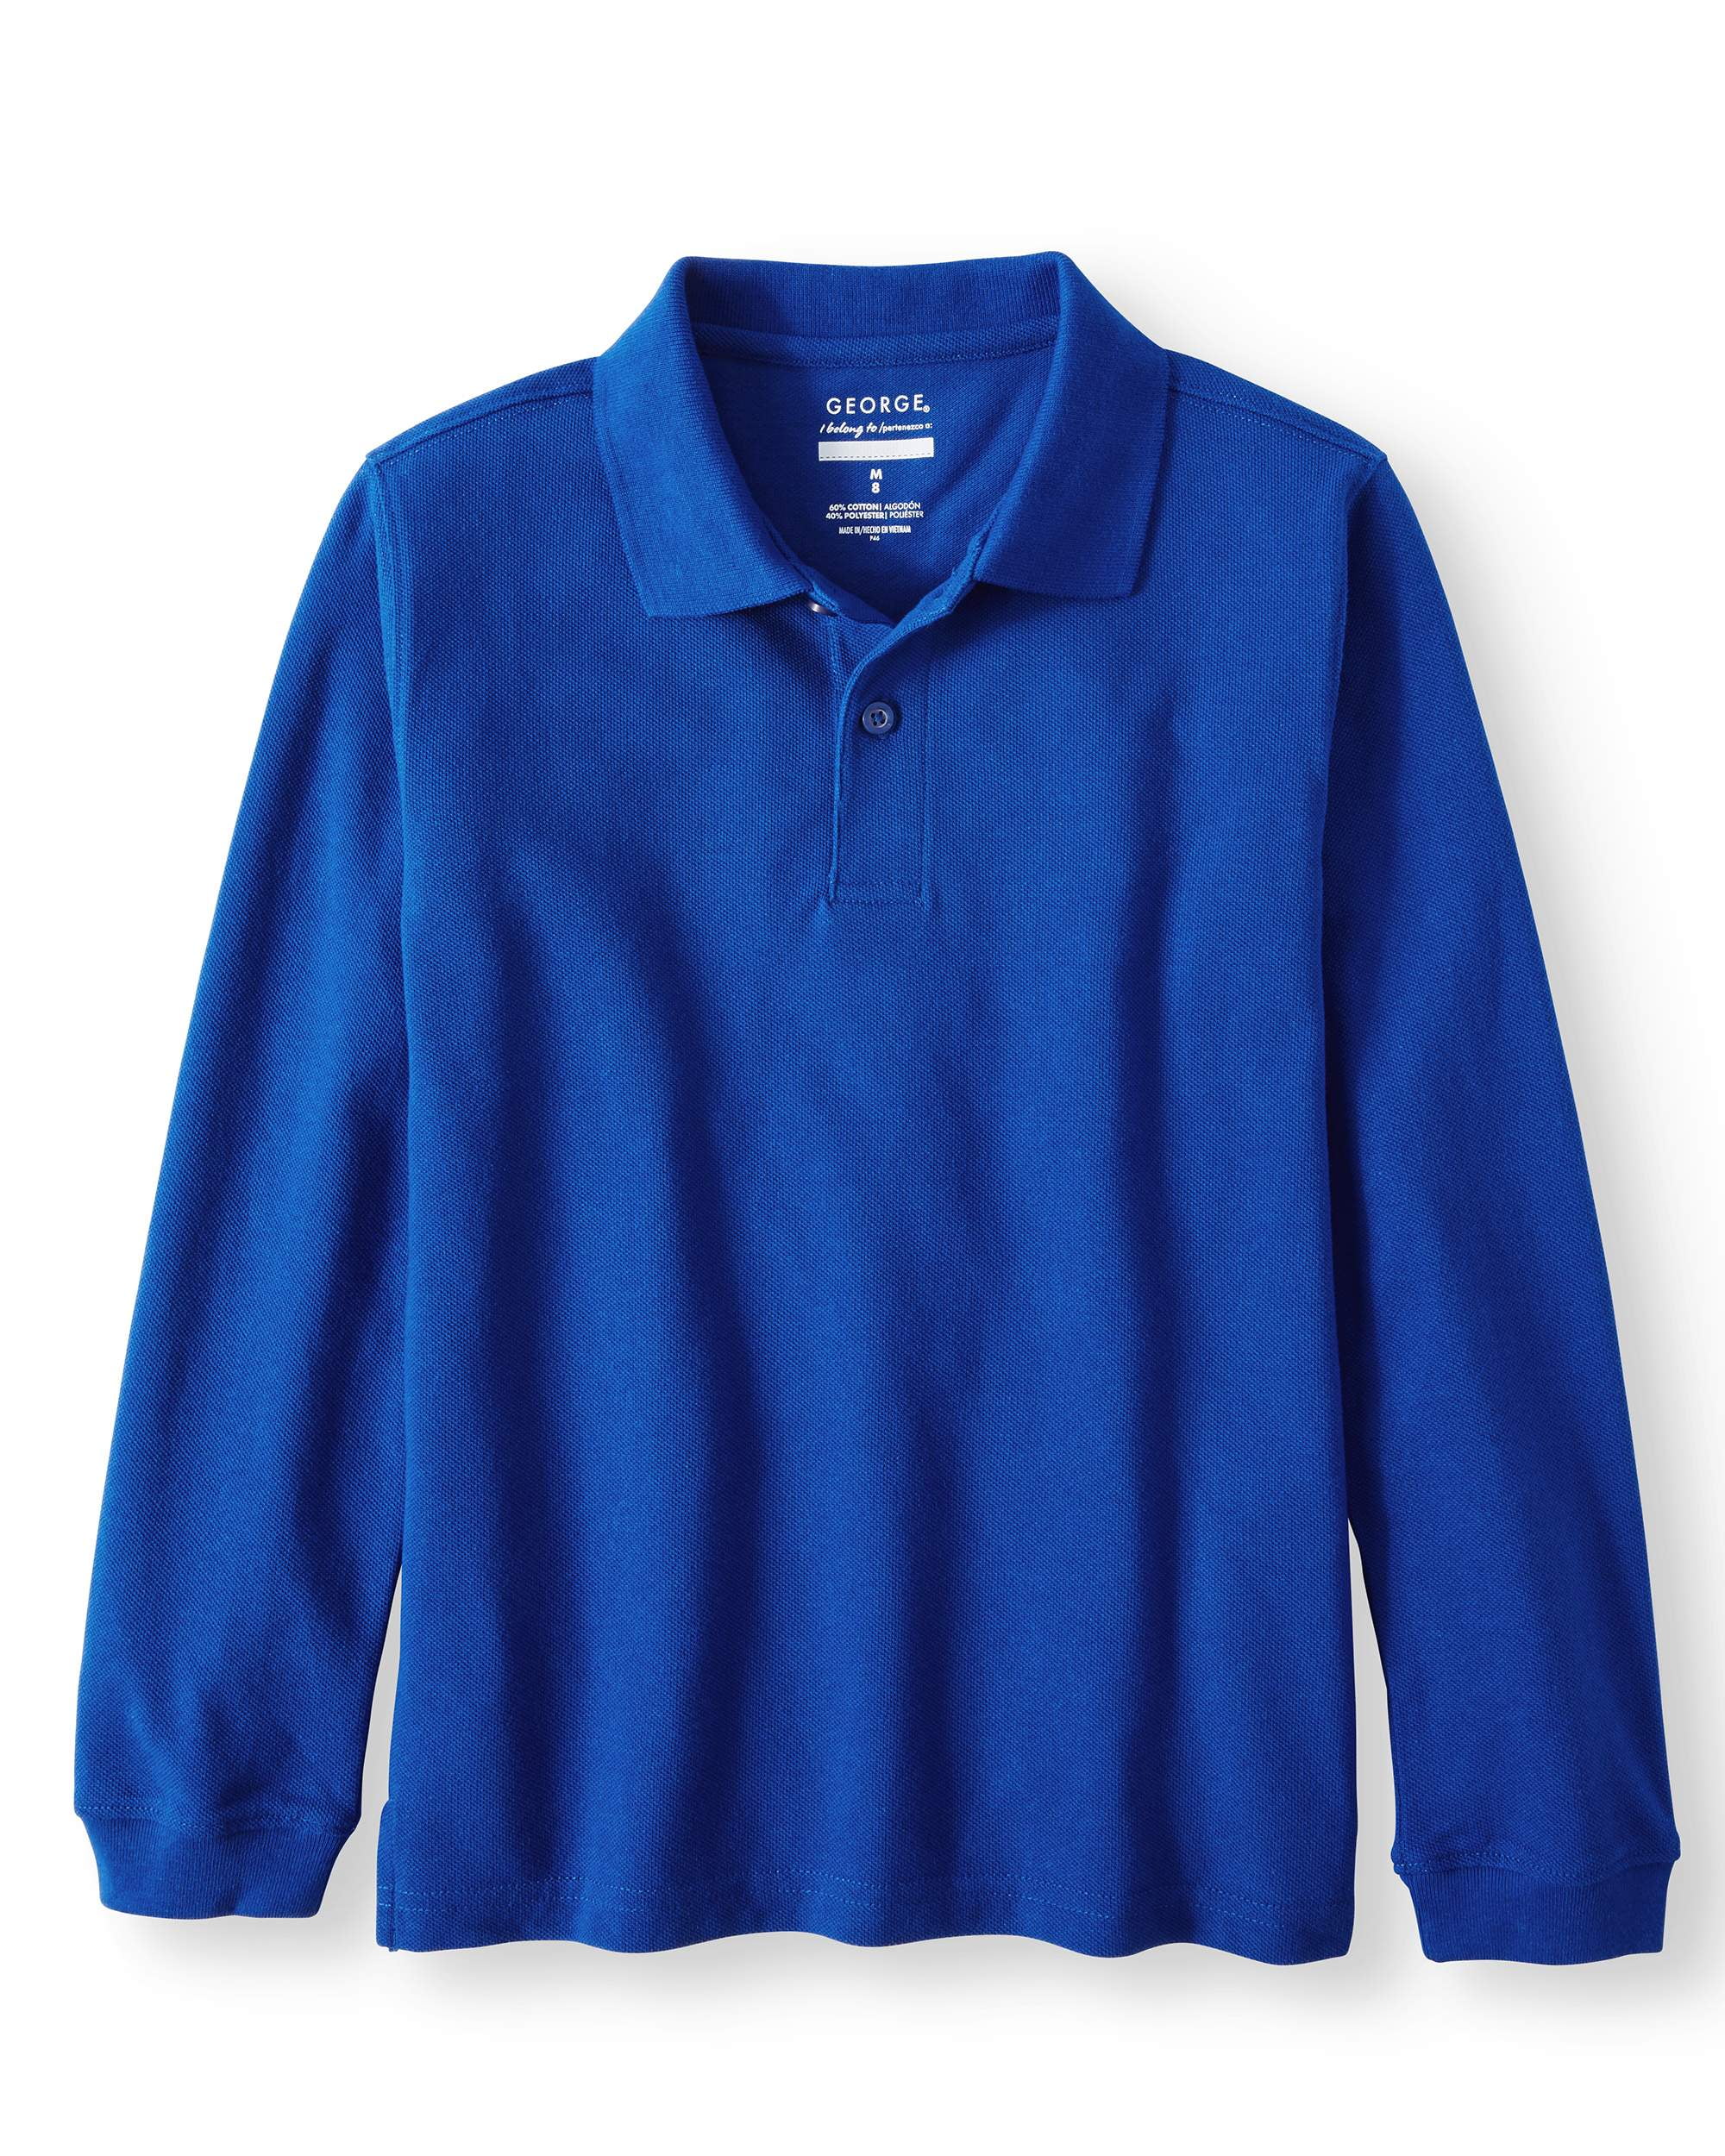 ONLINE - George Boys' School Uniforms, Long Sleev - Walmart.com ...